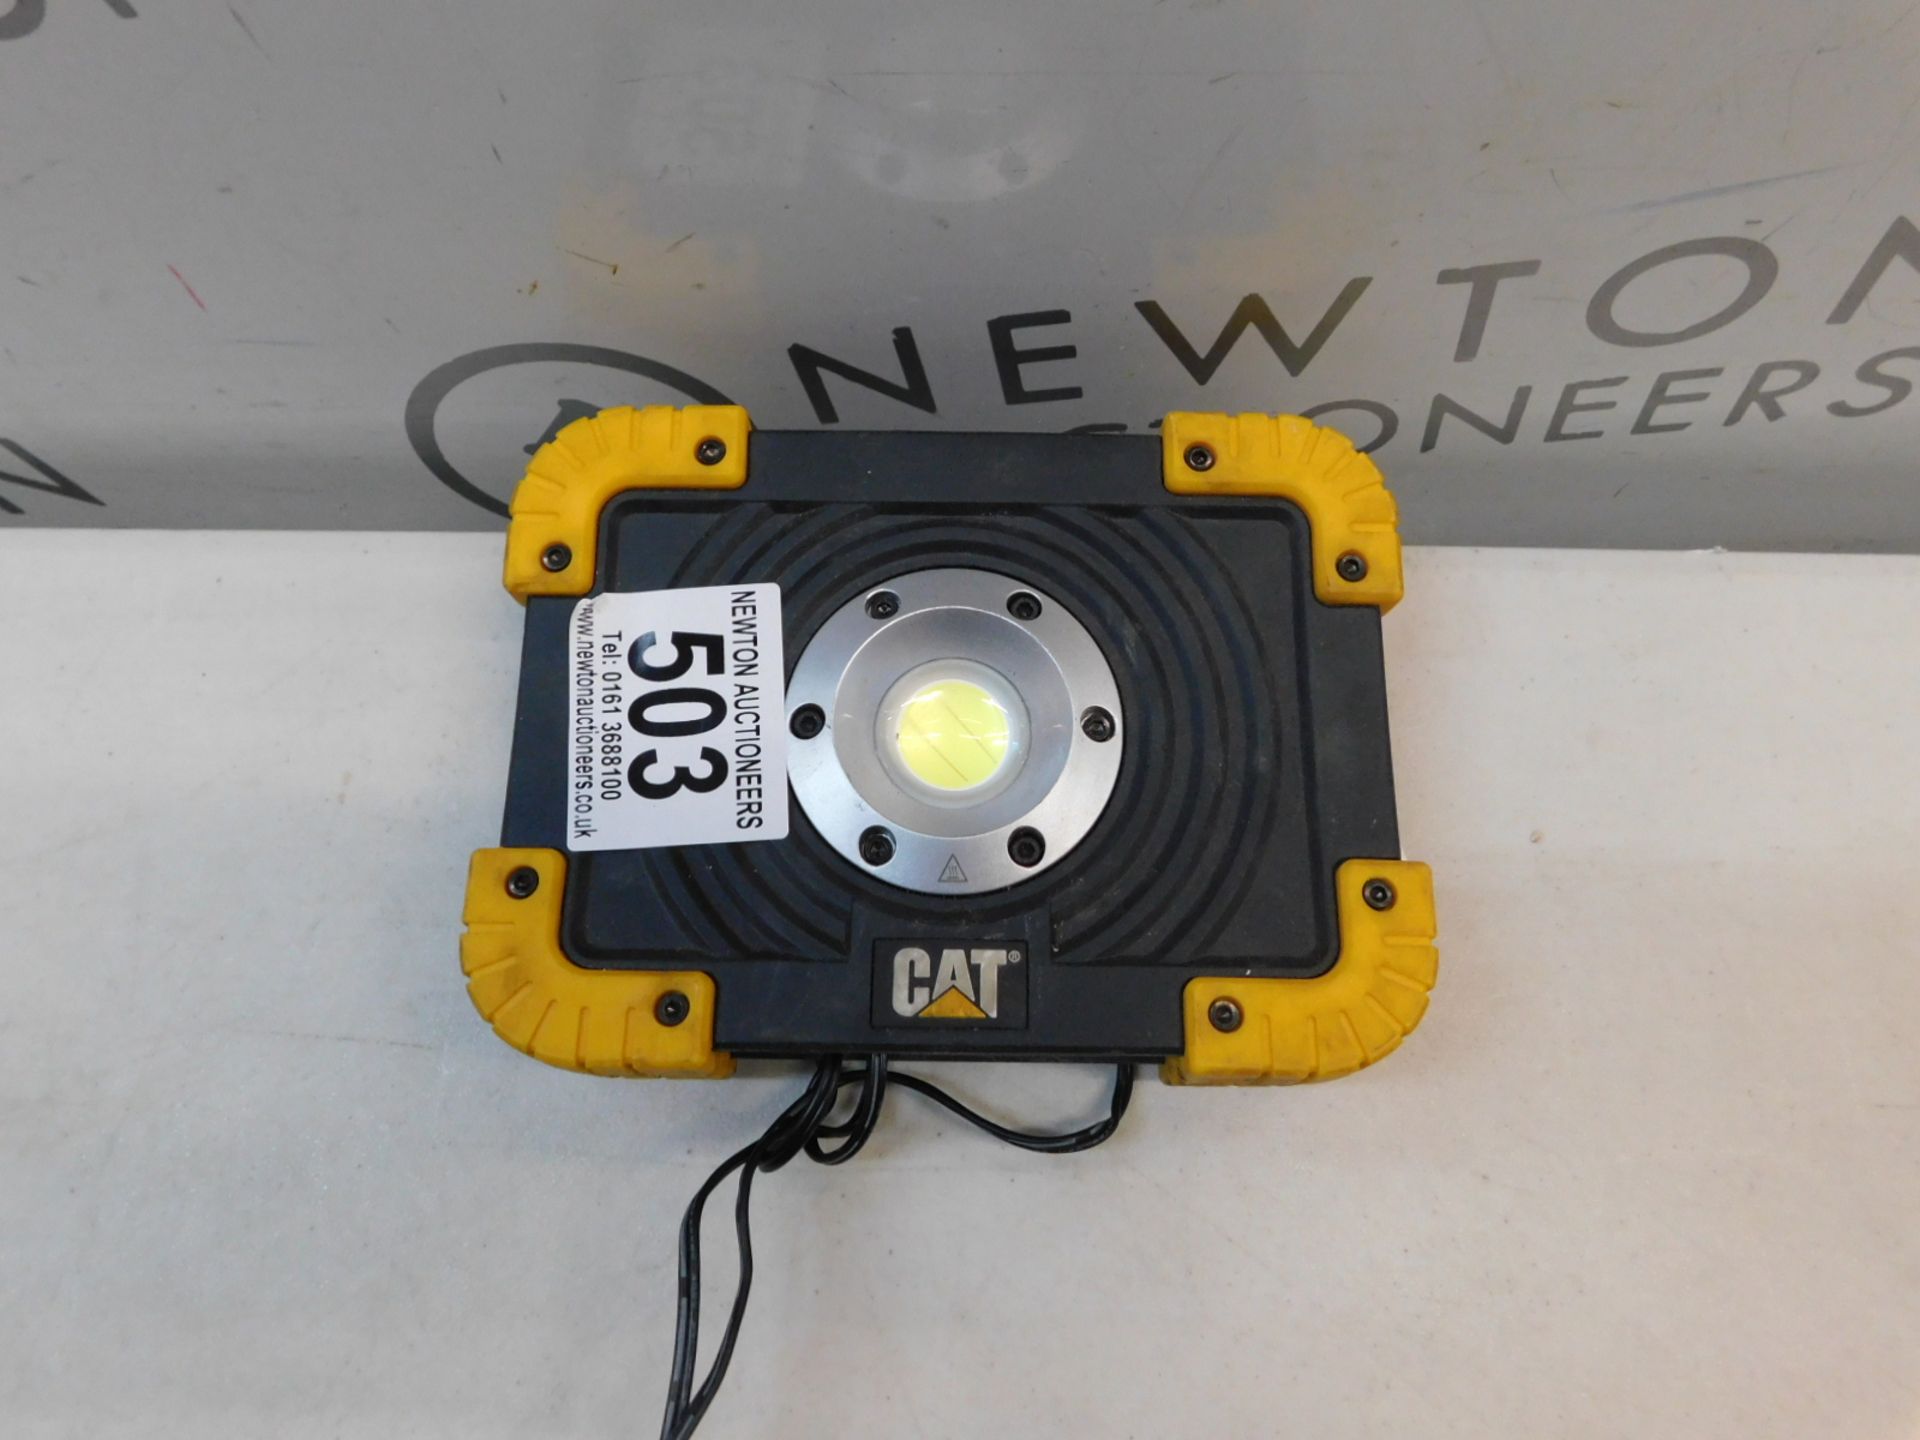 1 CAT RECHARGEABLE LED WORK LIGHT RRP Â£39.99